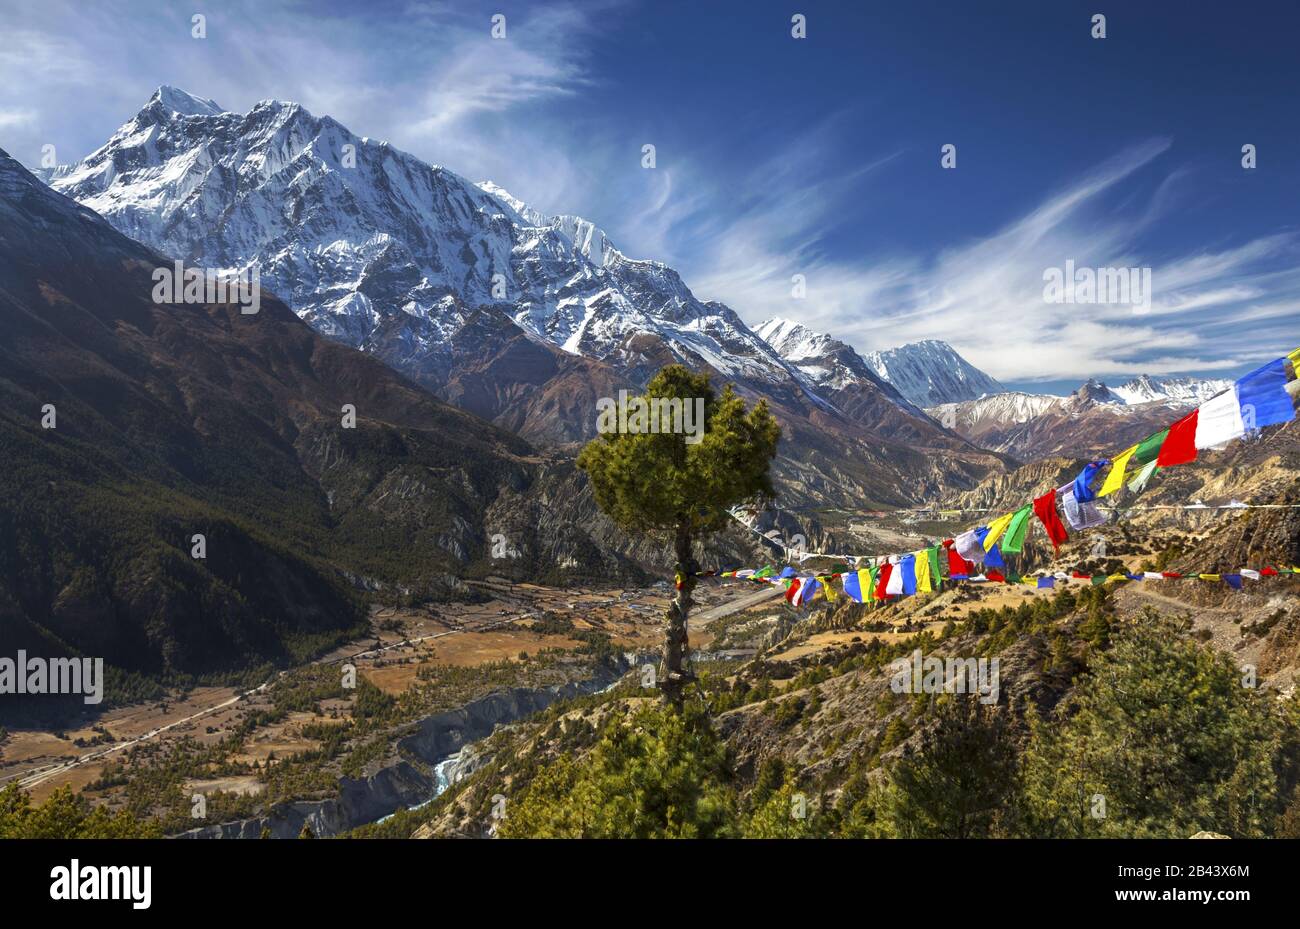 Himalaya Mountain Peak Range Landscape Scenic Skyline View, Buddhist Prayer Flags and Isolated Tree on Annapurna Circuit Trekking Hike Route in Nepal Stock Photo